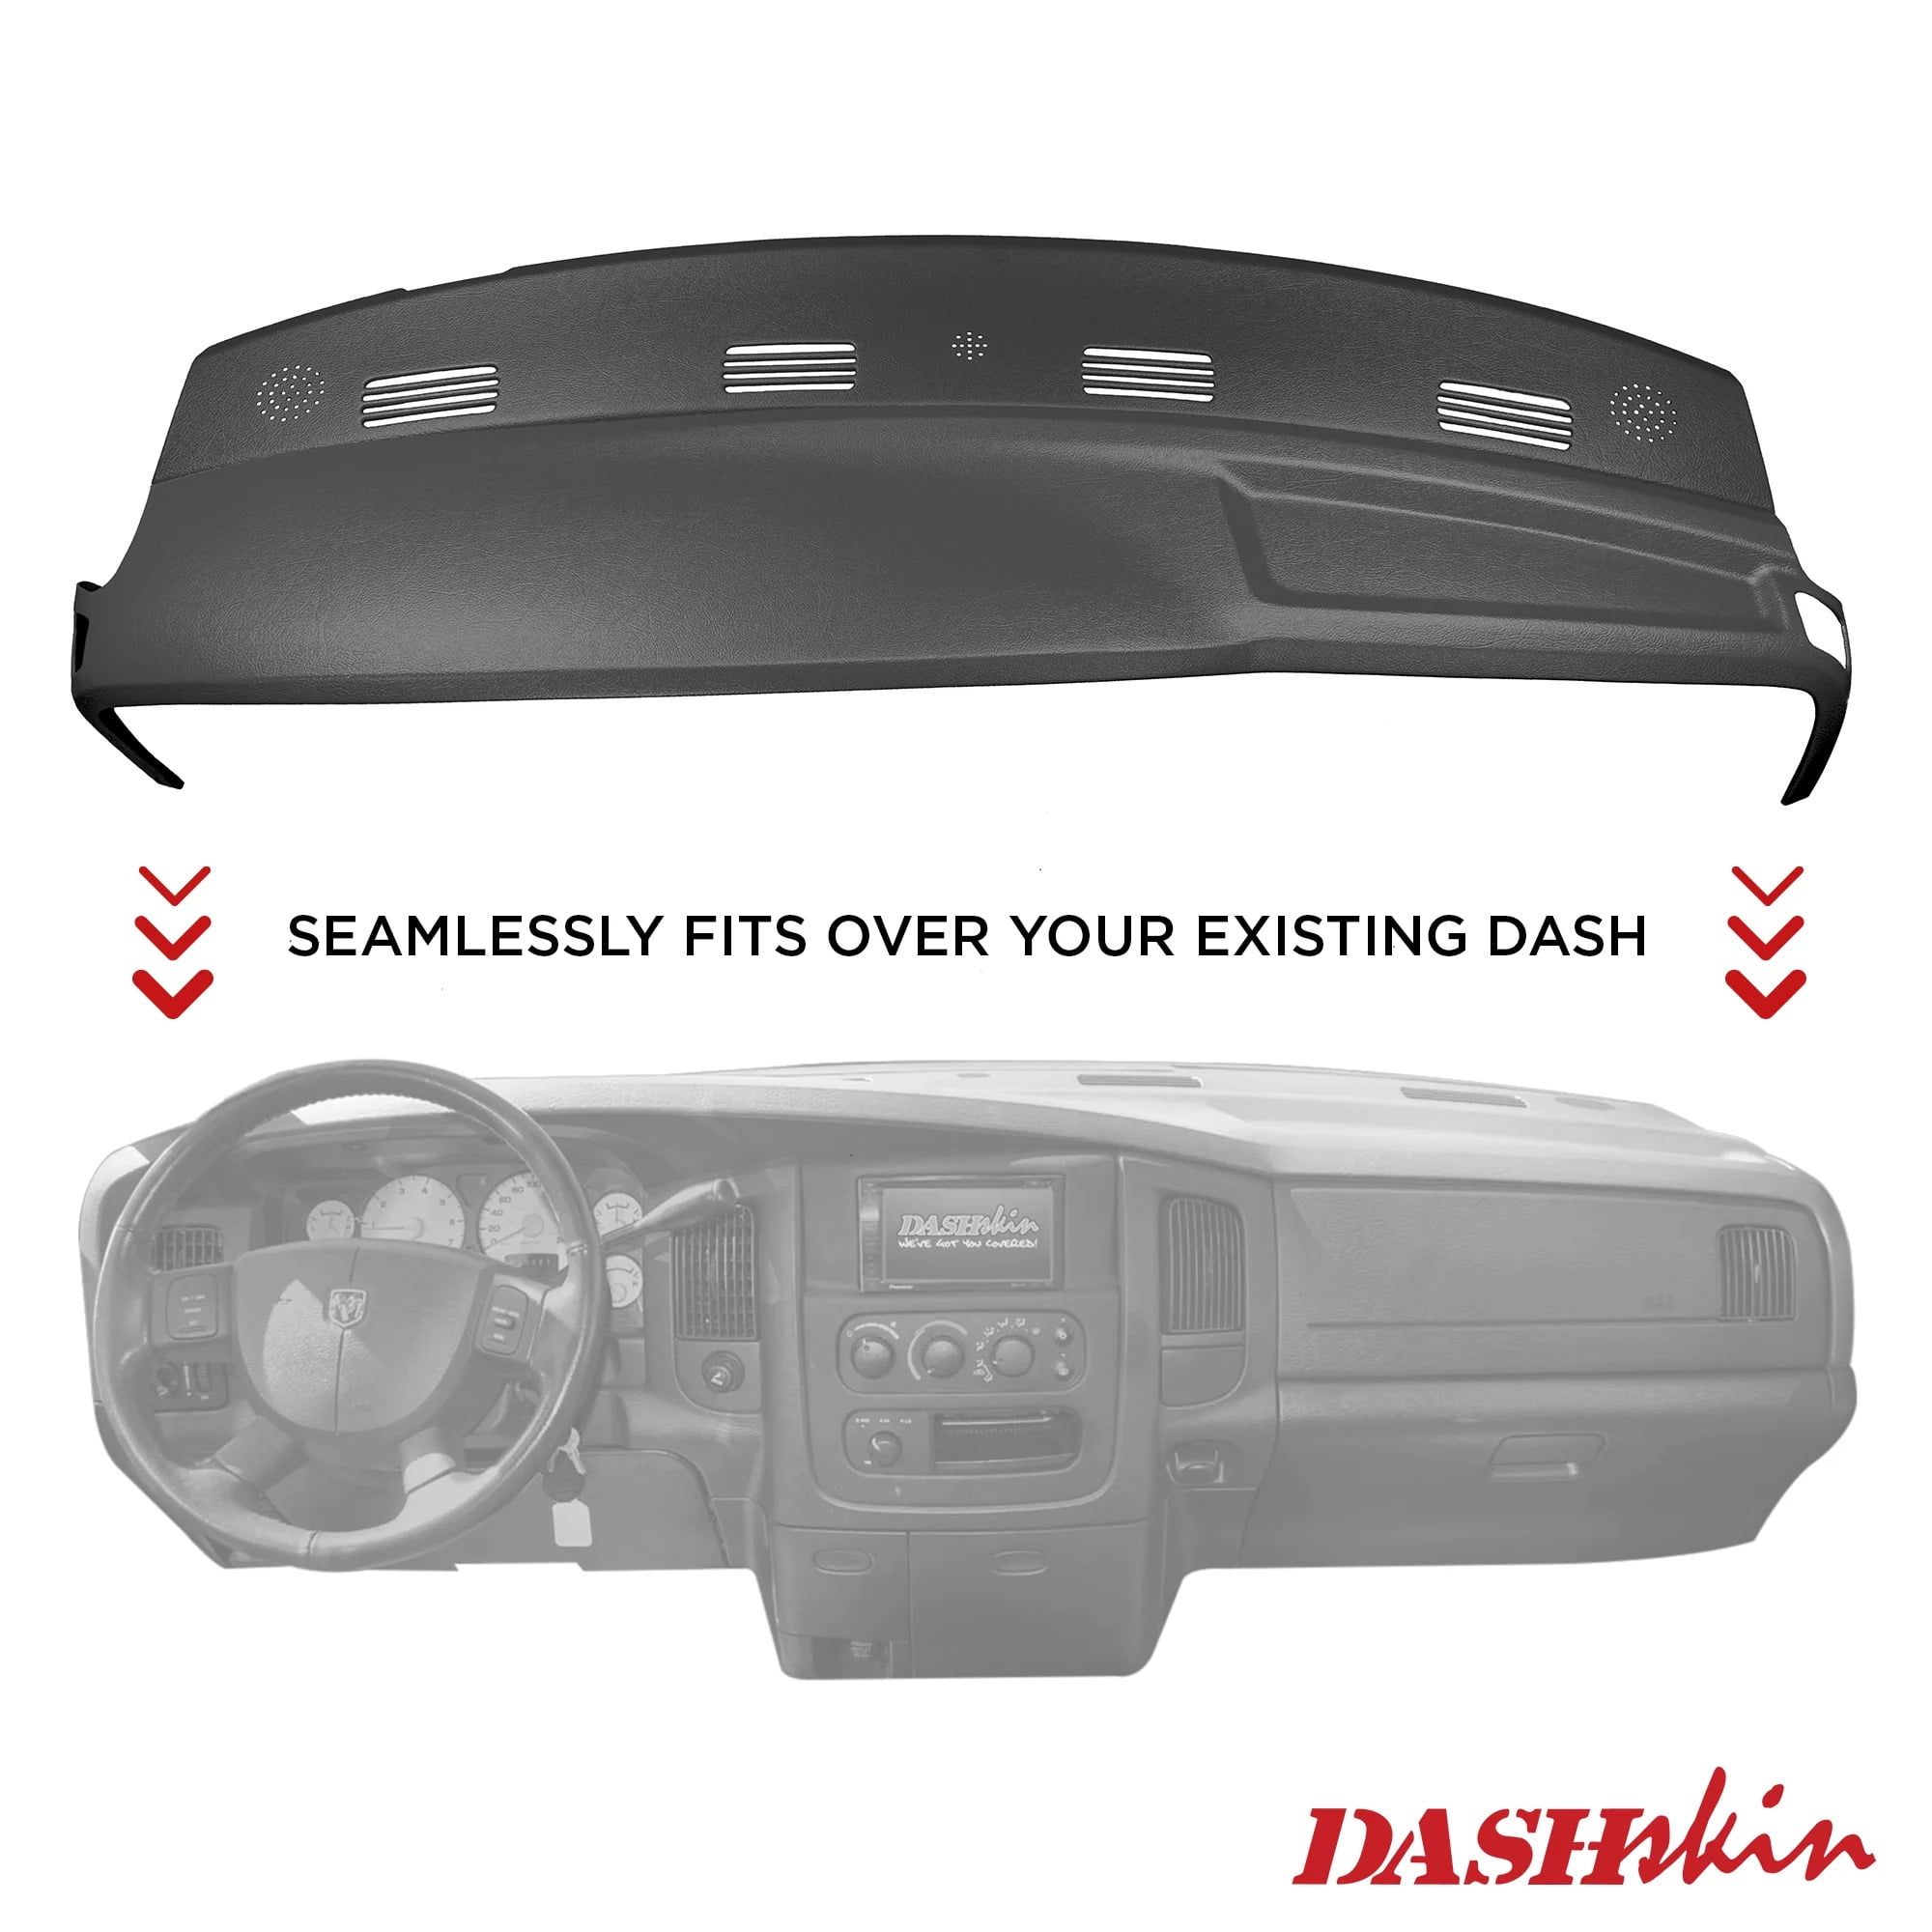 FIILINES Dashboard Cover Custom Fit for Dodge Ram 1500 2500 3500 1998-2001  Dash Cover Ram Accessories Dash Mat Sunshade Anti-Slip Pad Carpet Protector